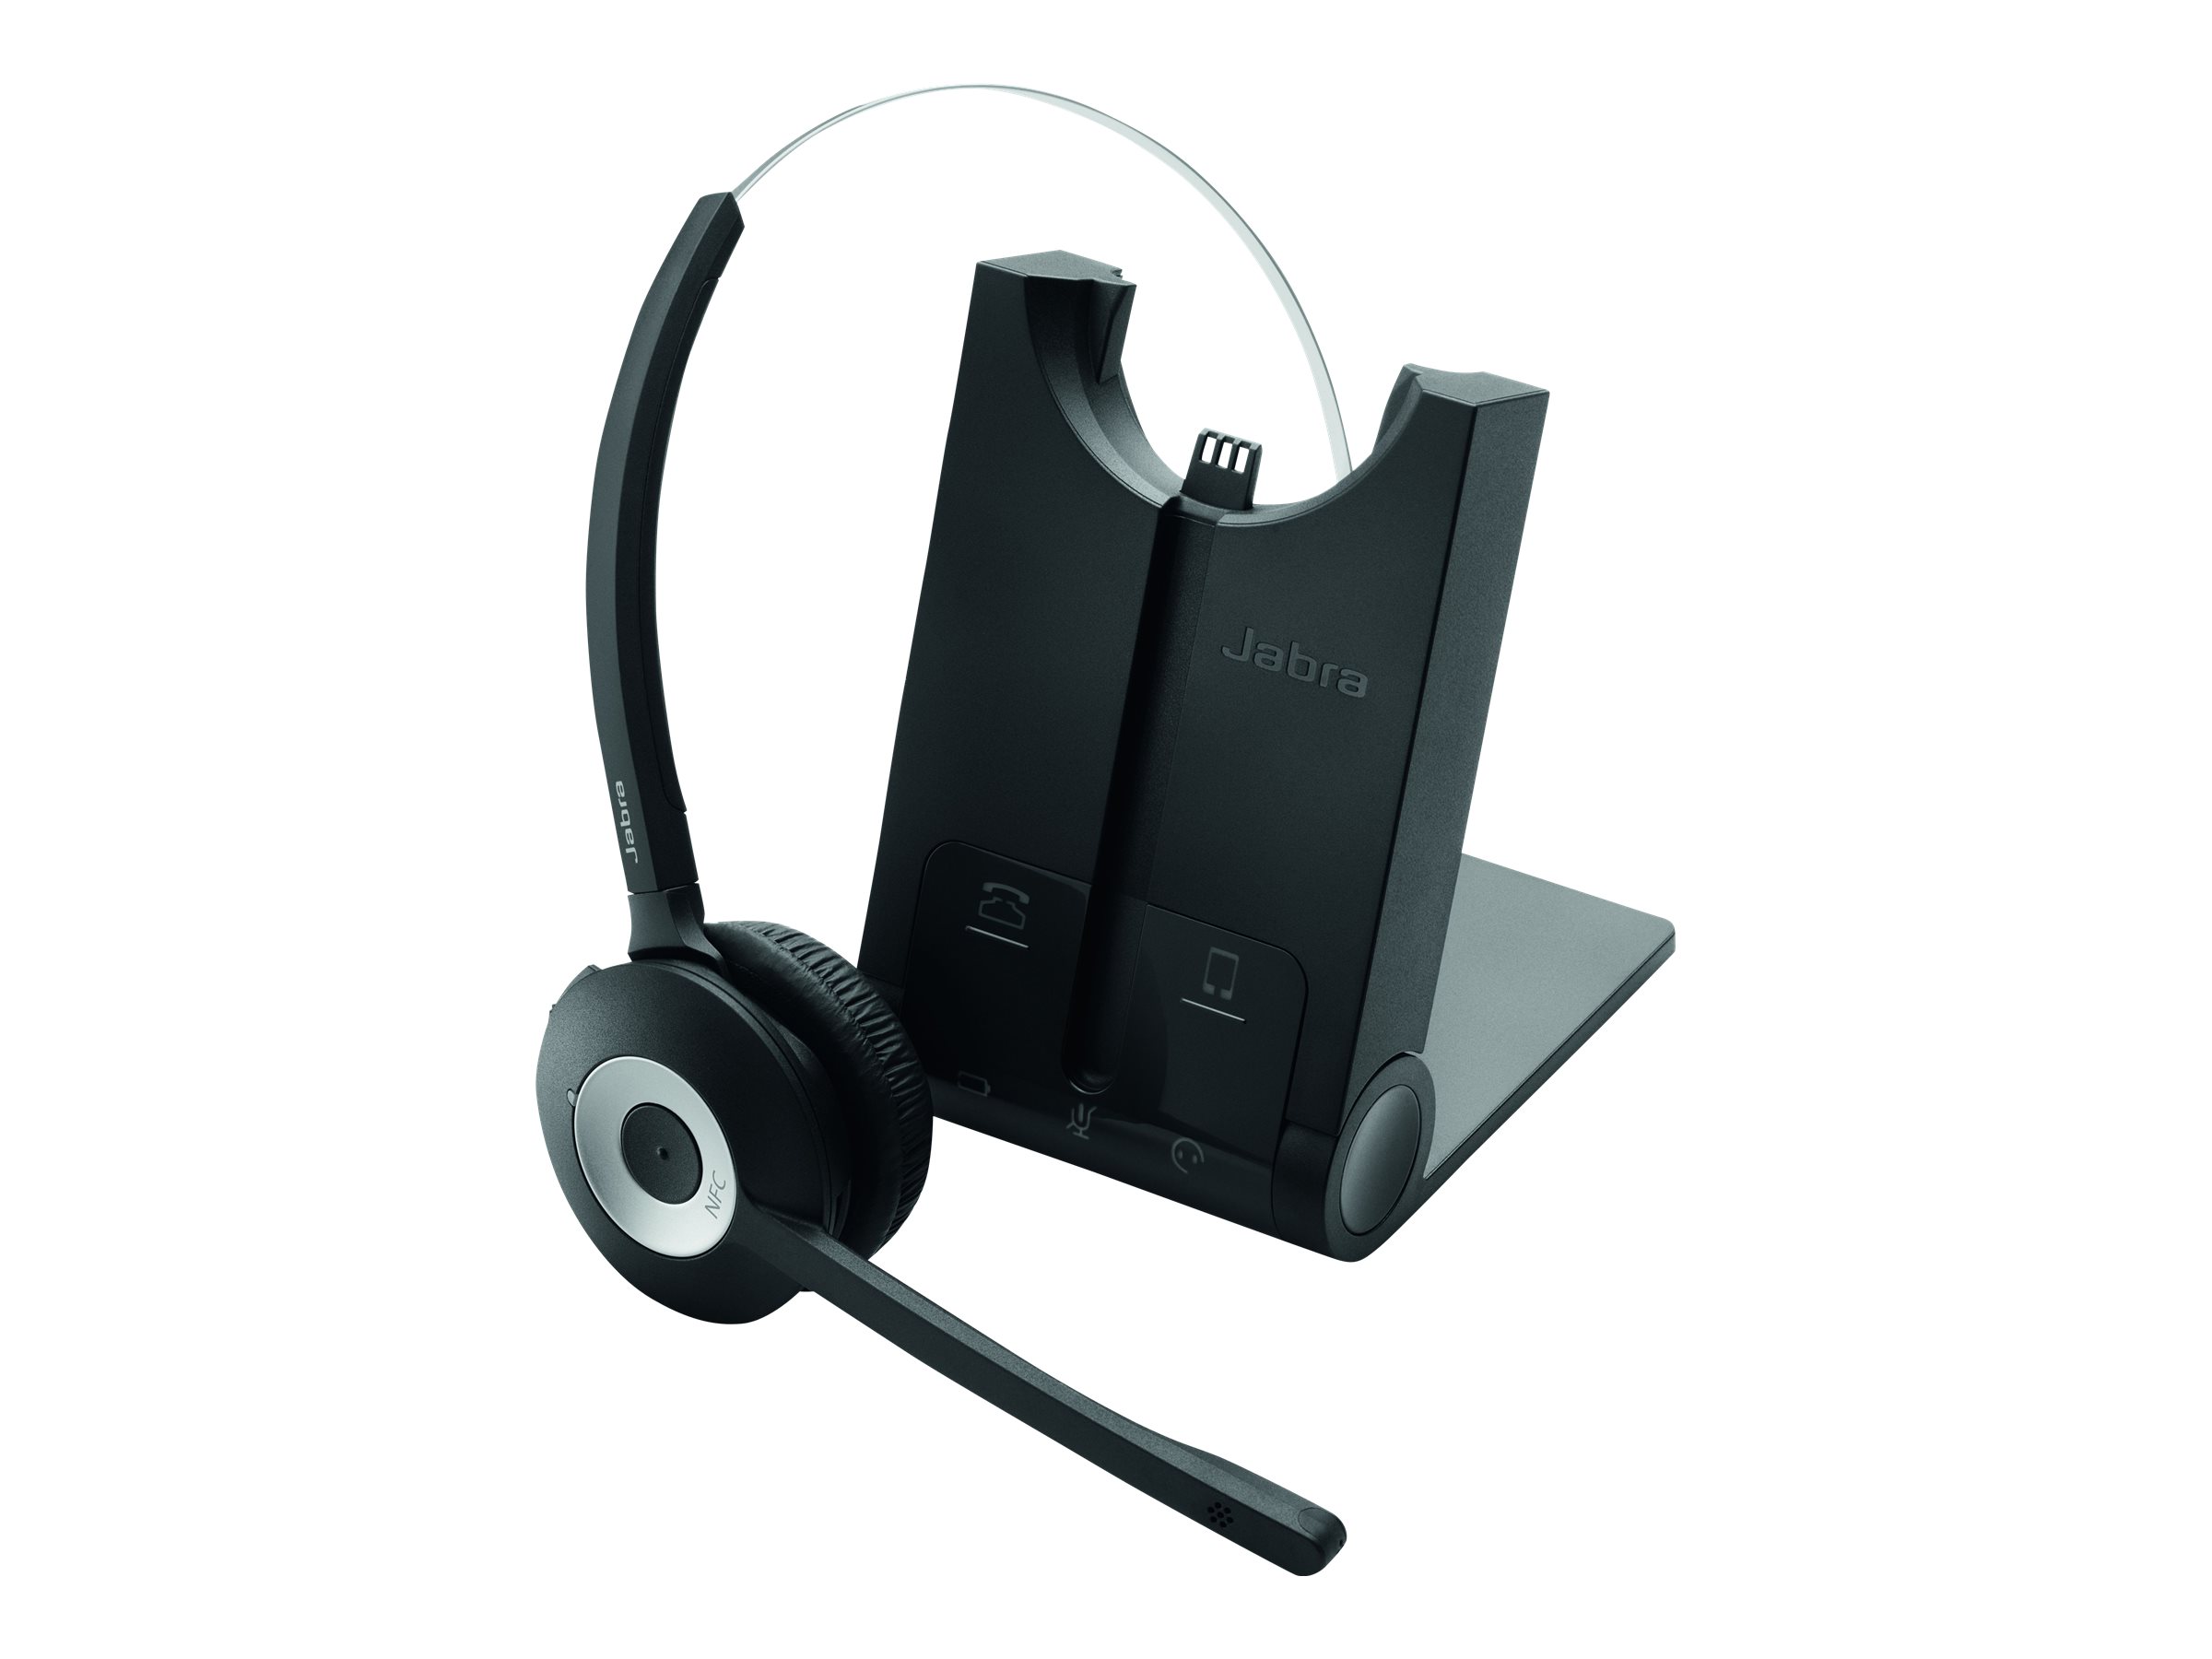 Jabra PRO 925 Dual Connectivity - Headset - On-Ear - konvertierbar - Bluetooth - kabellos